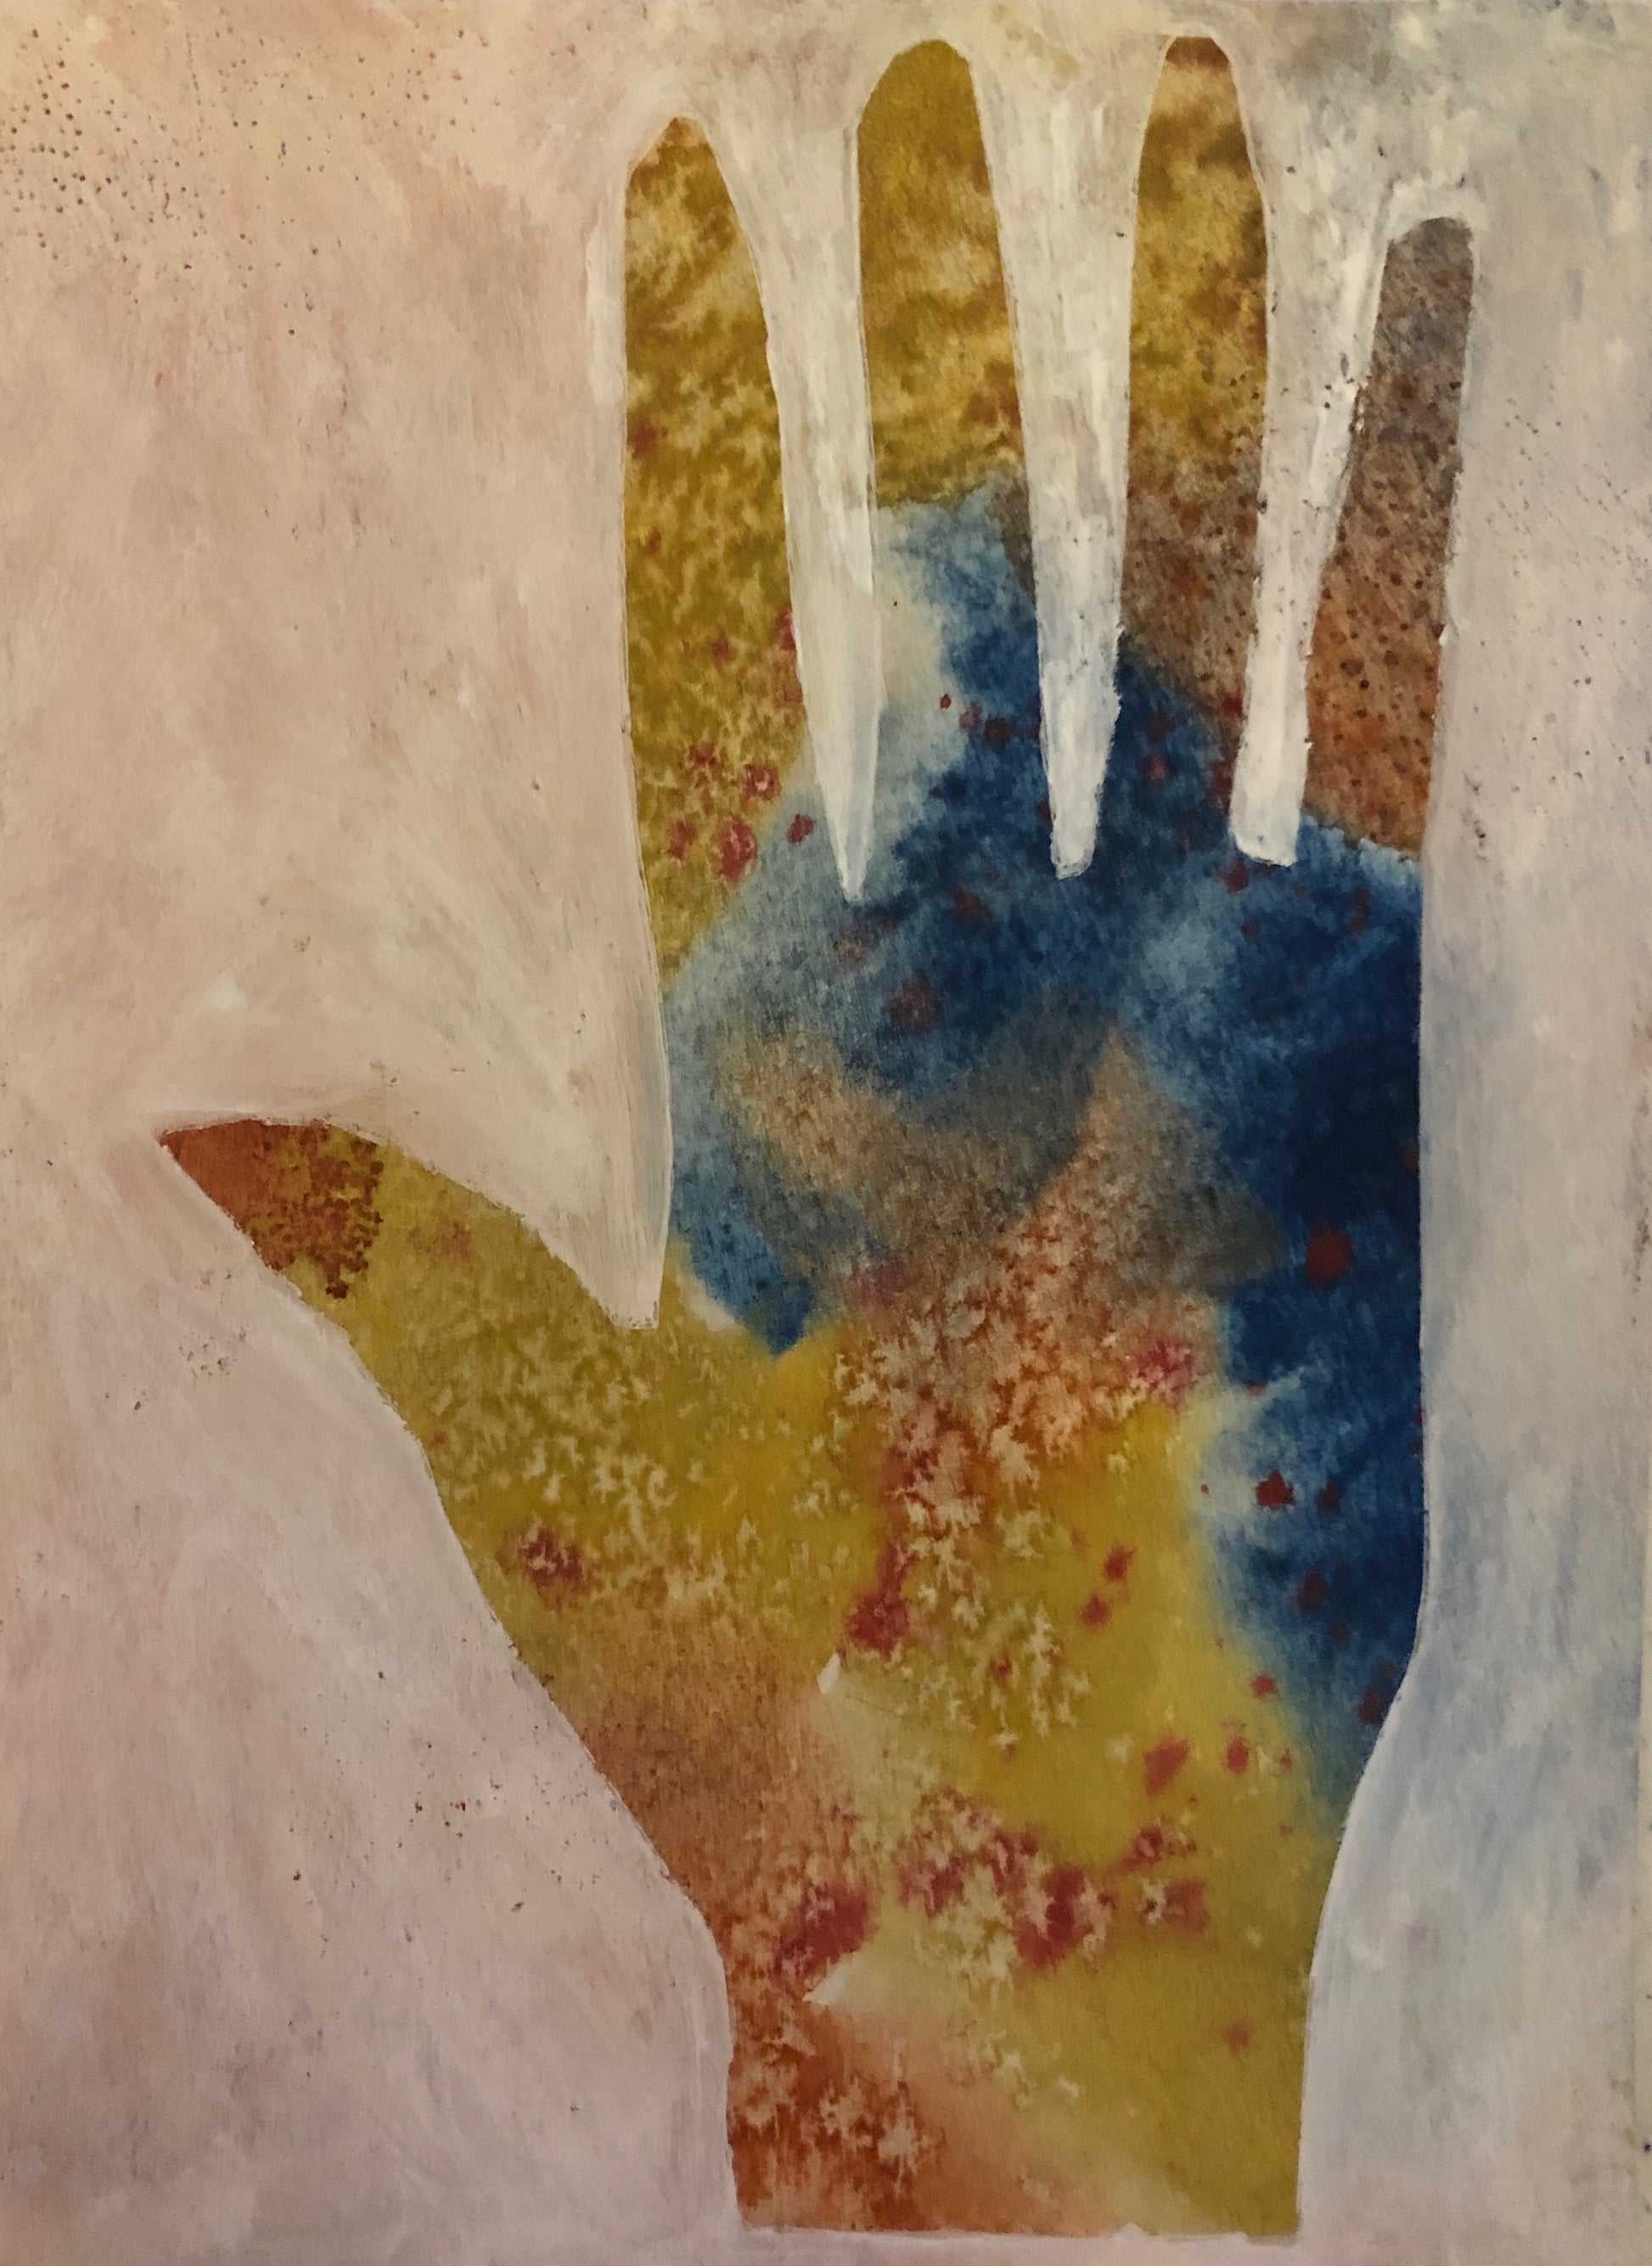 Himalayan salt based artwork of a hand